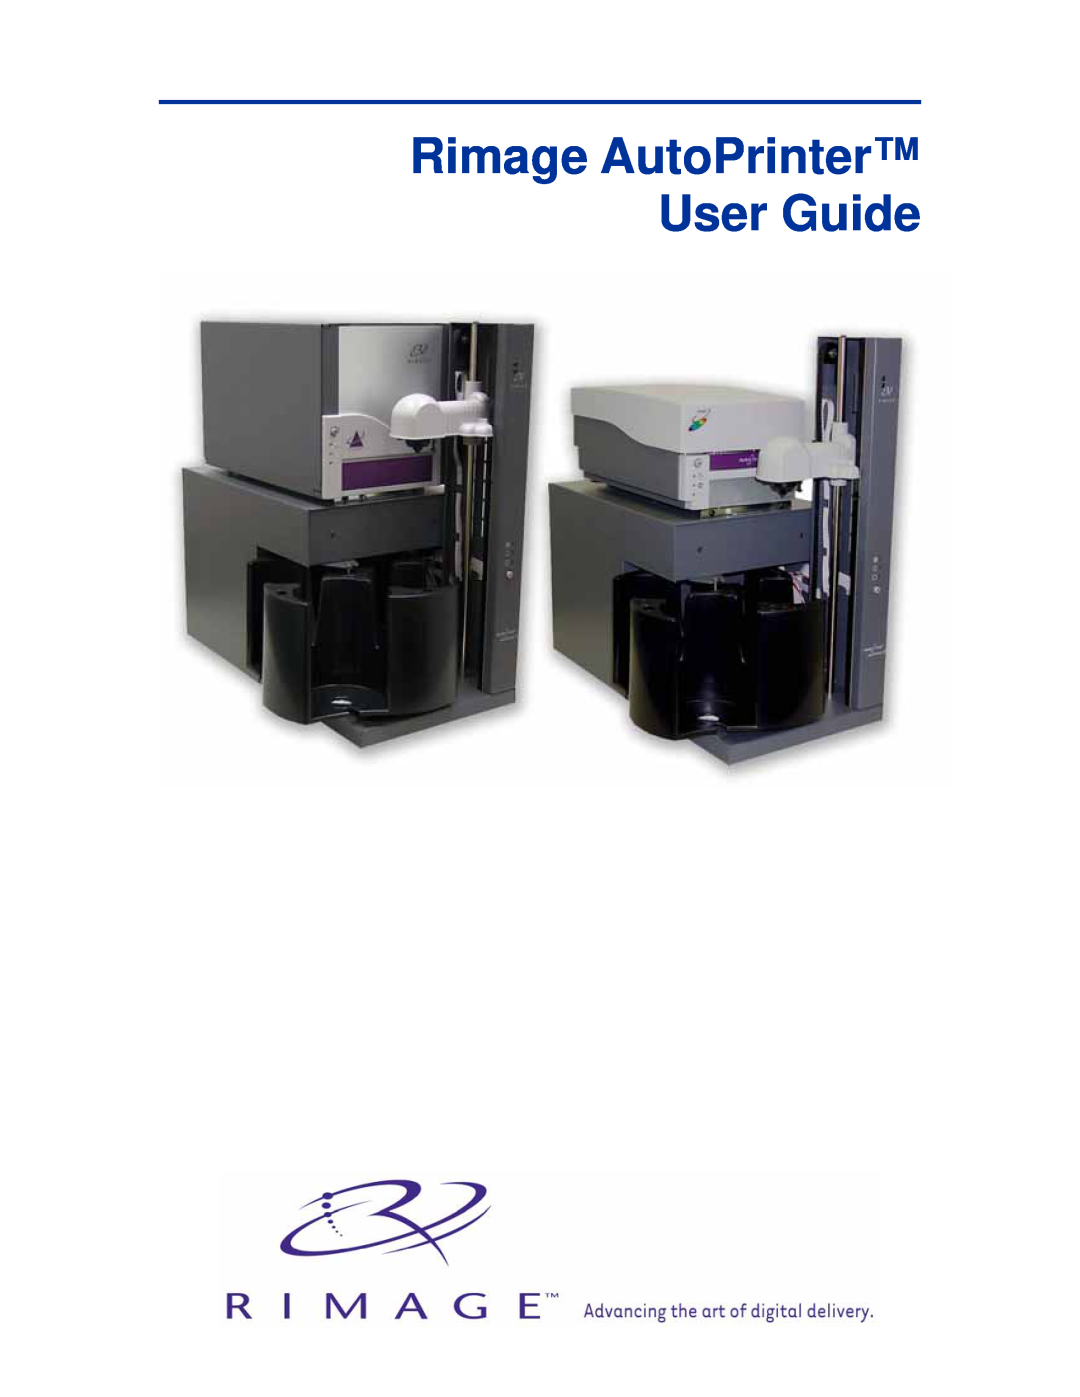 Rimage RAS10 manual Rimage AutoPrinter User Guide 